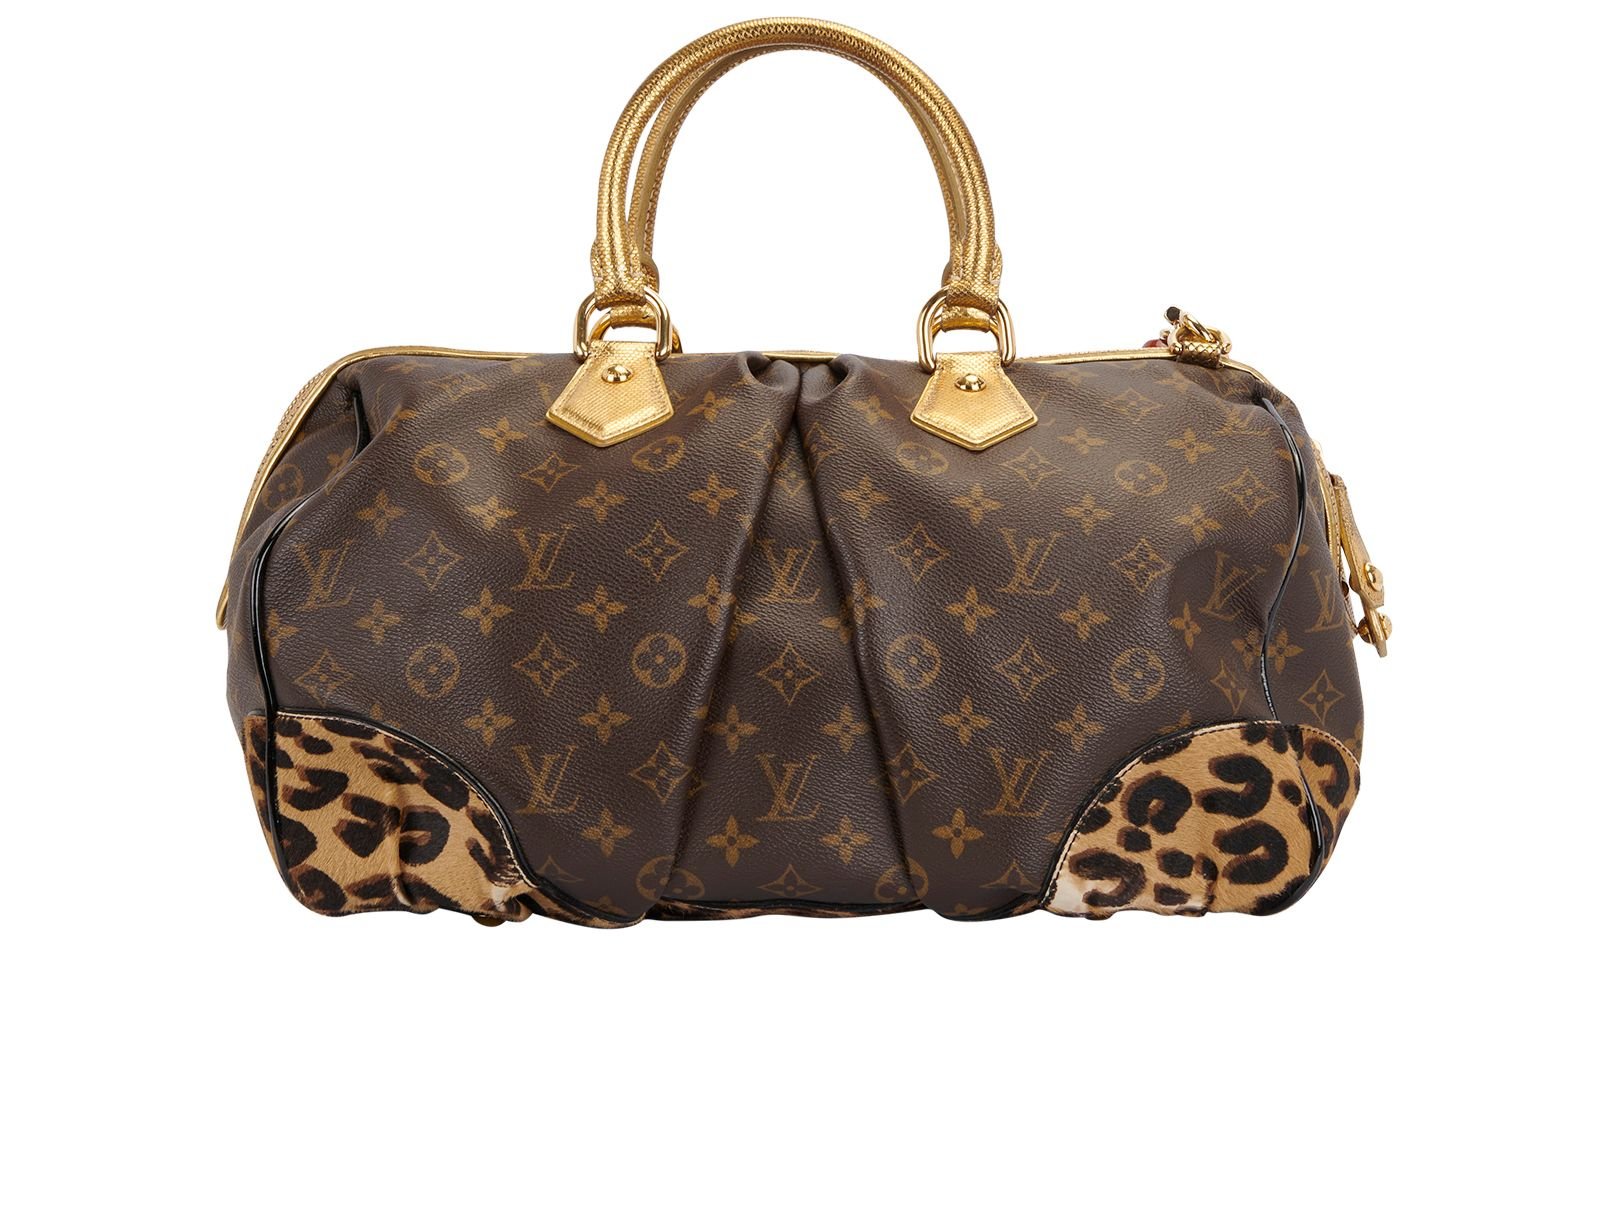 Louis Vuitton Stephen Sprouse Boston Handbag